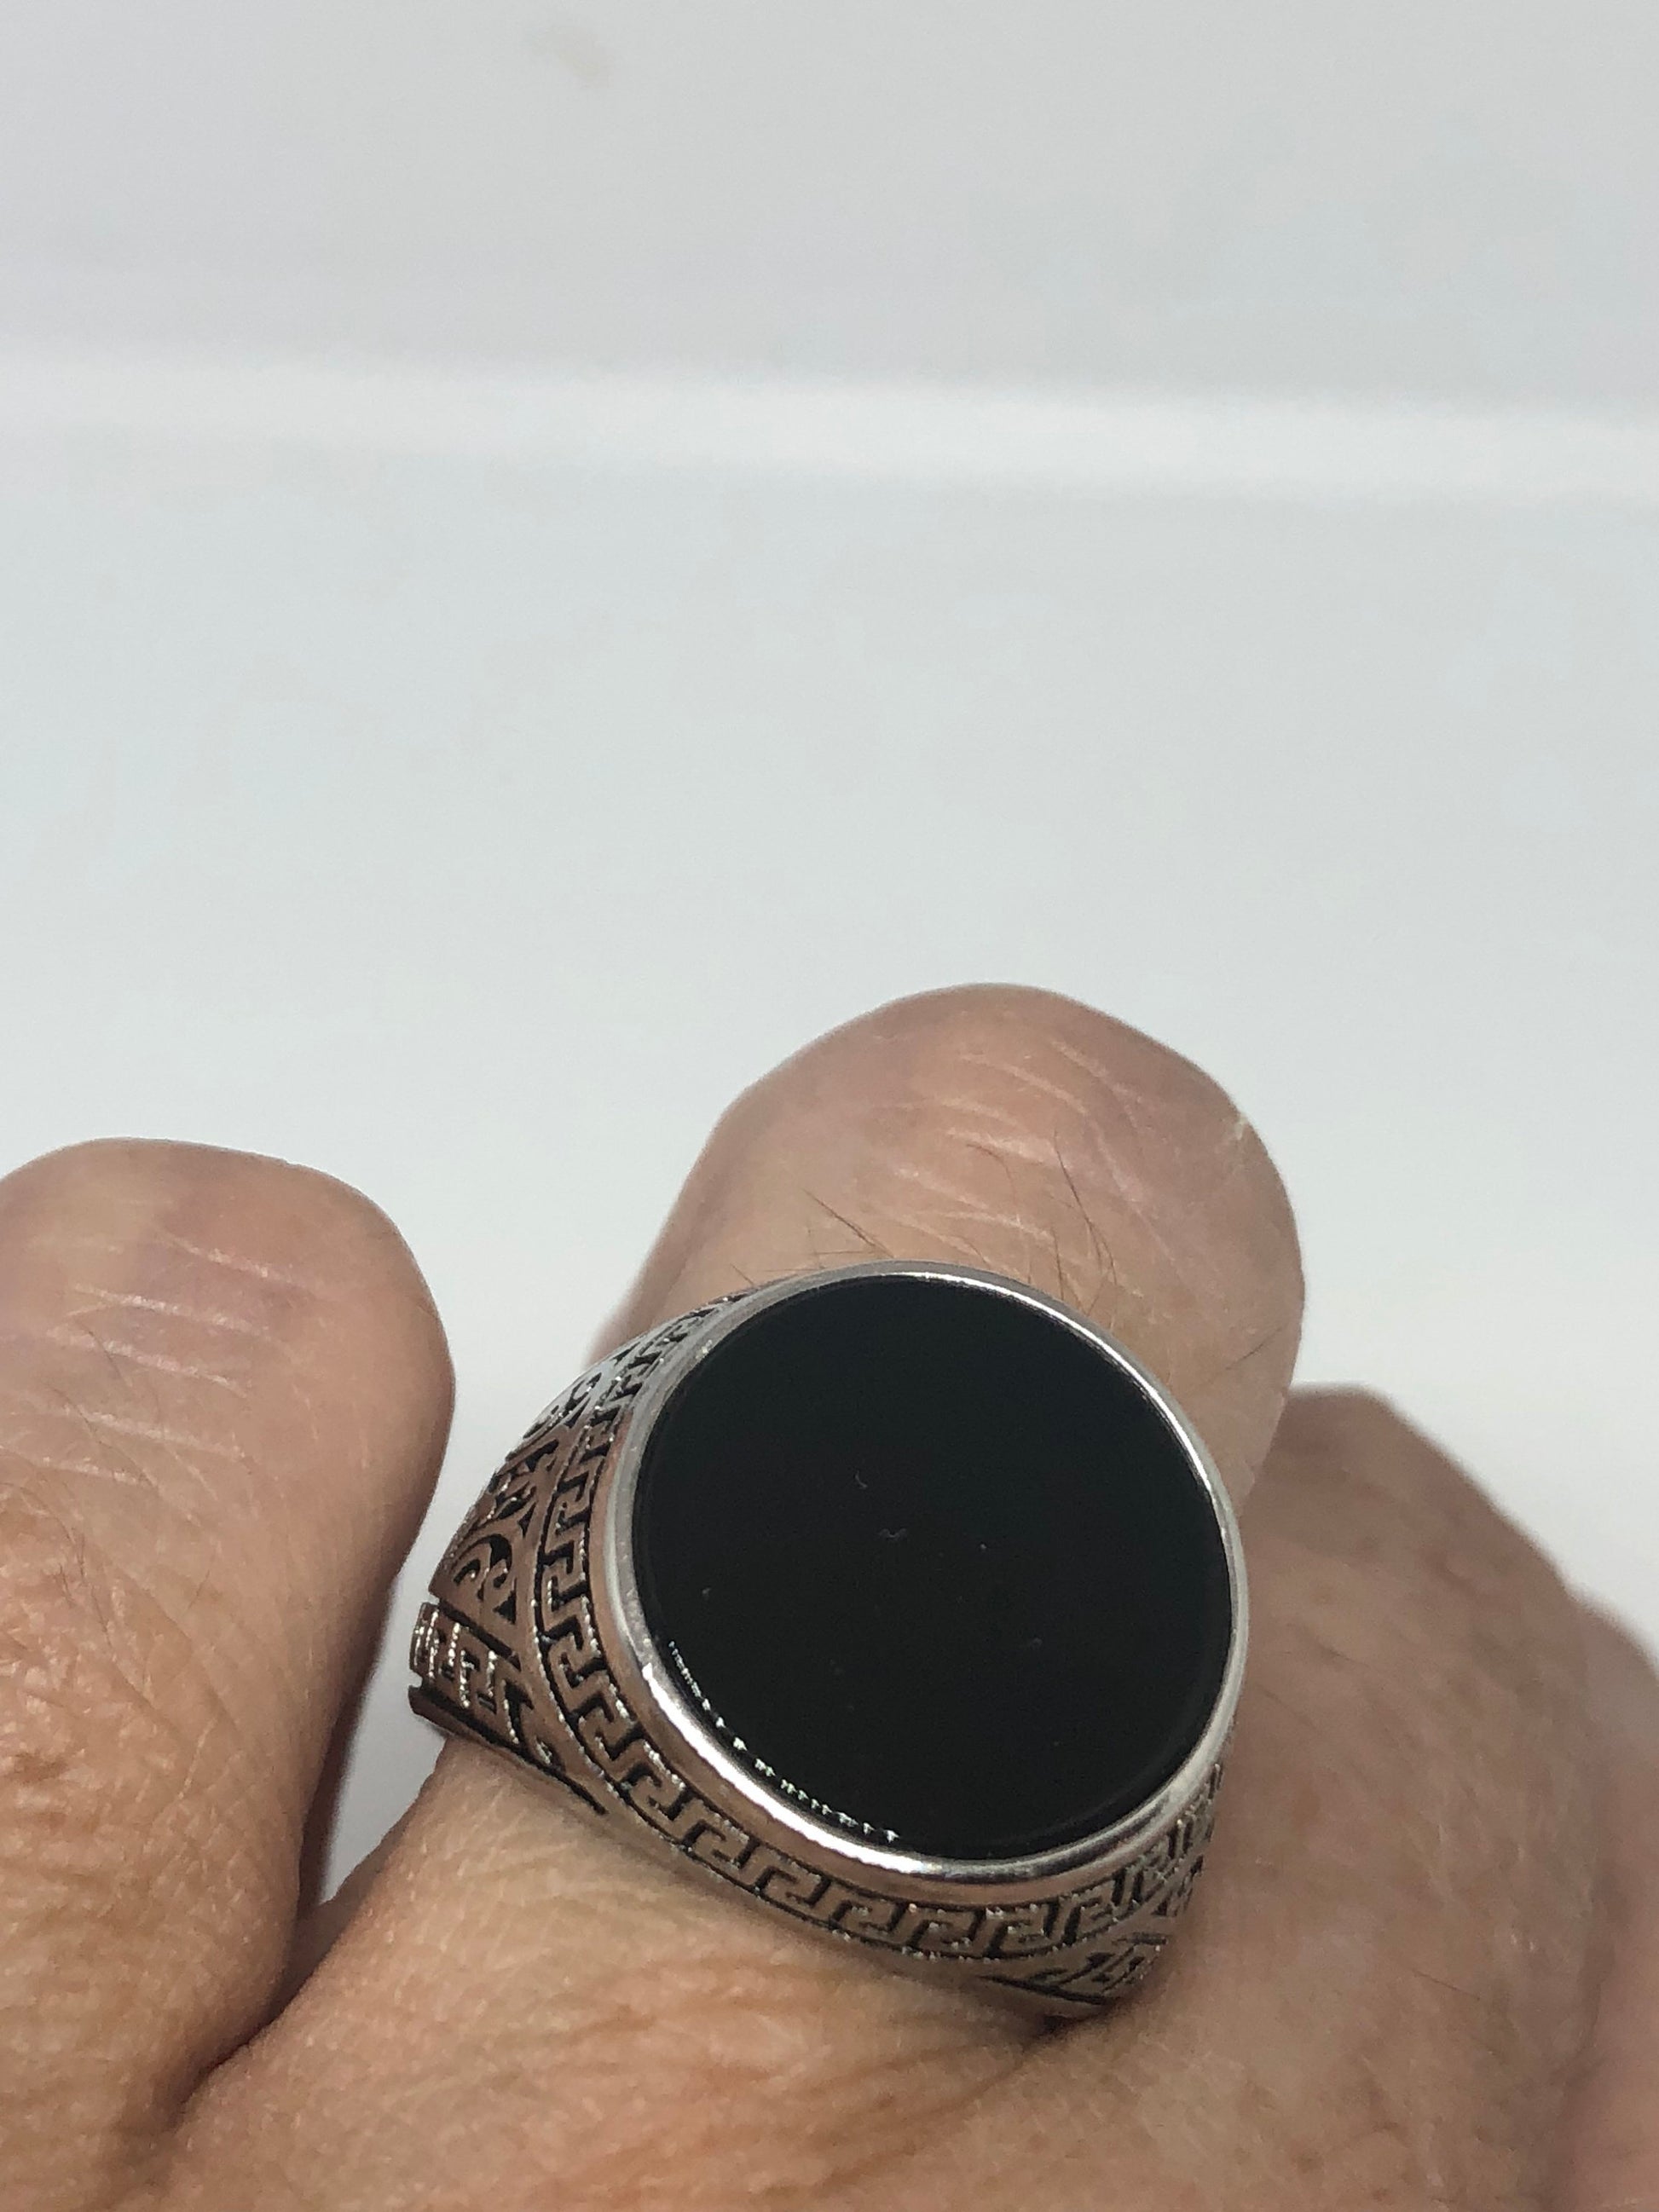 Vintage Onyx Mens Ring 925 Sterling Silver Gothic Genuine Black Onyx